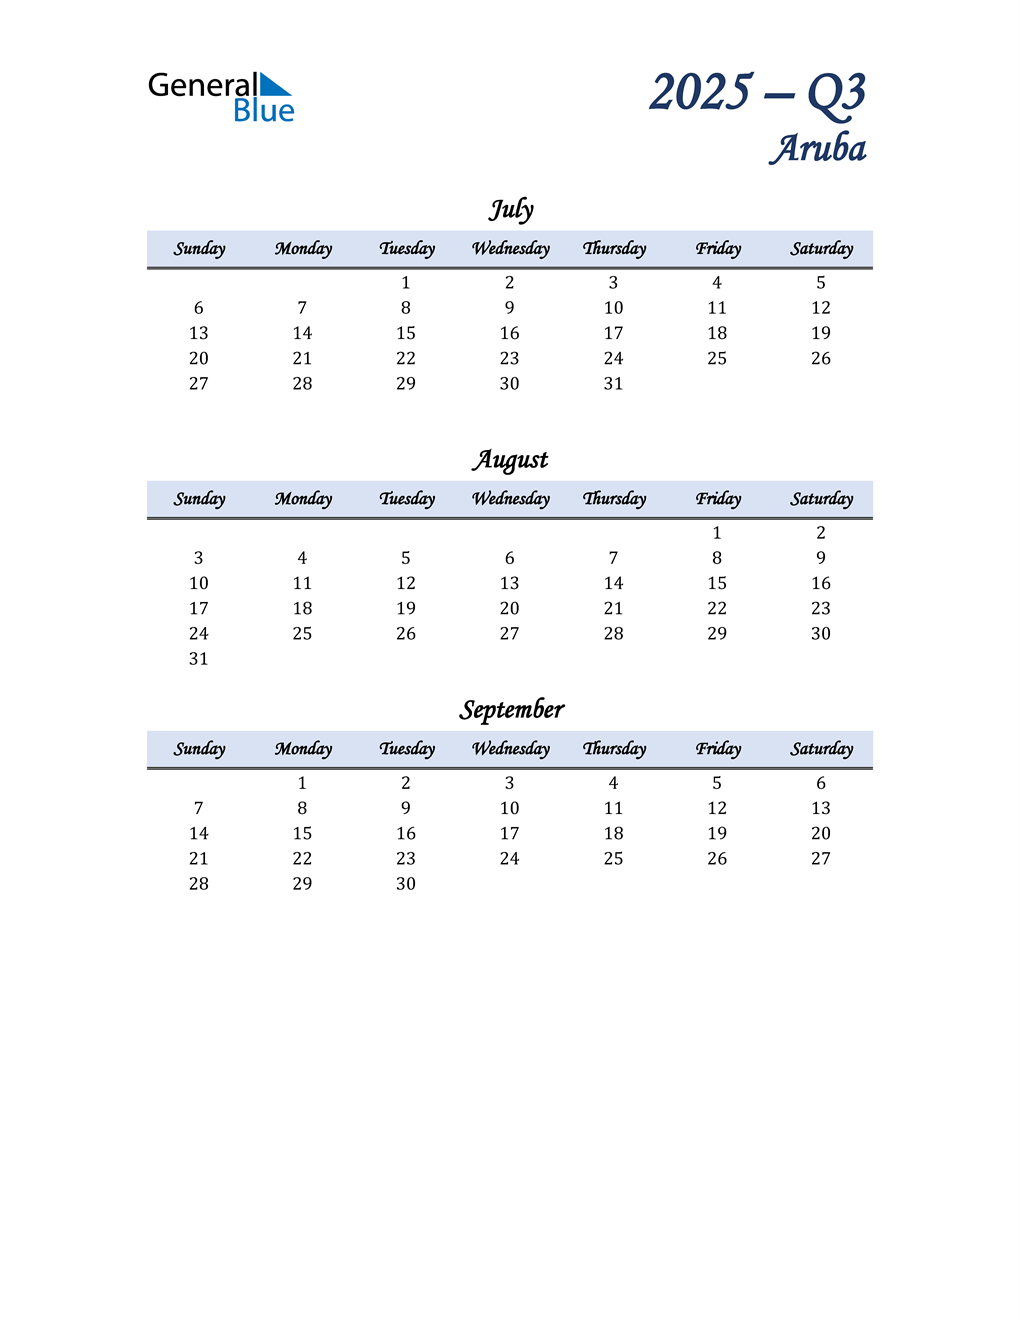  July, August, and September Calendar for Aruba